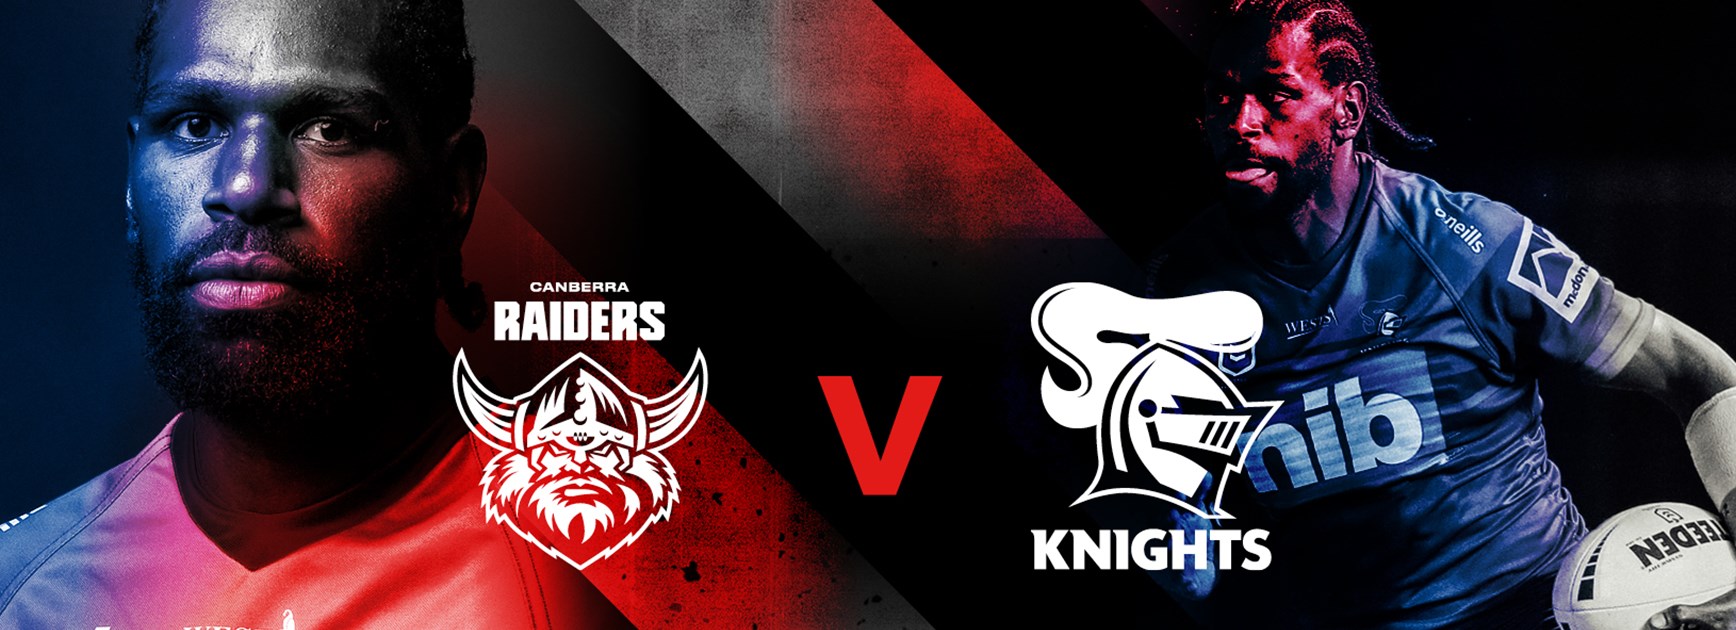 Knights v Raiders Round 4 NRL team list